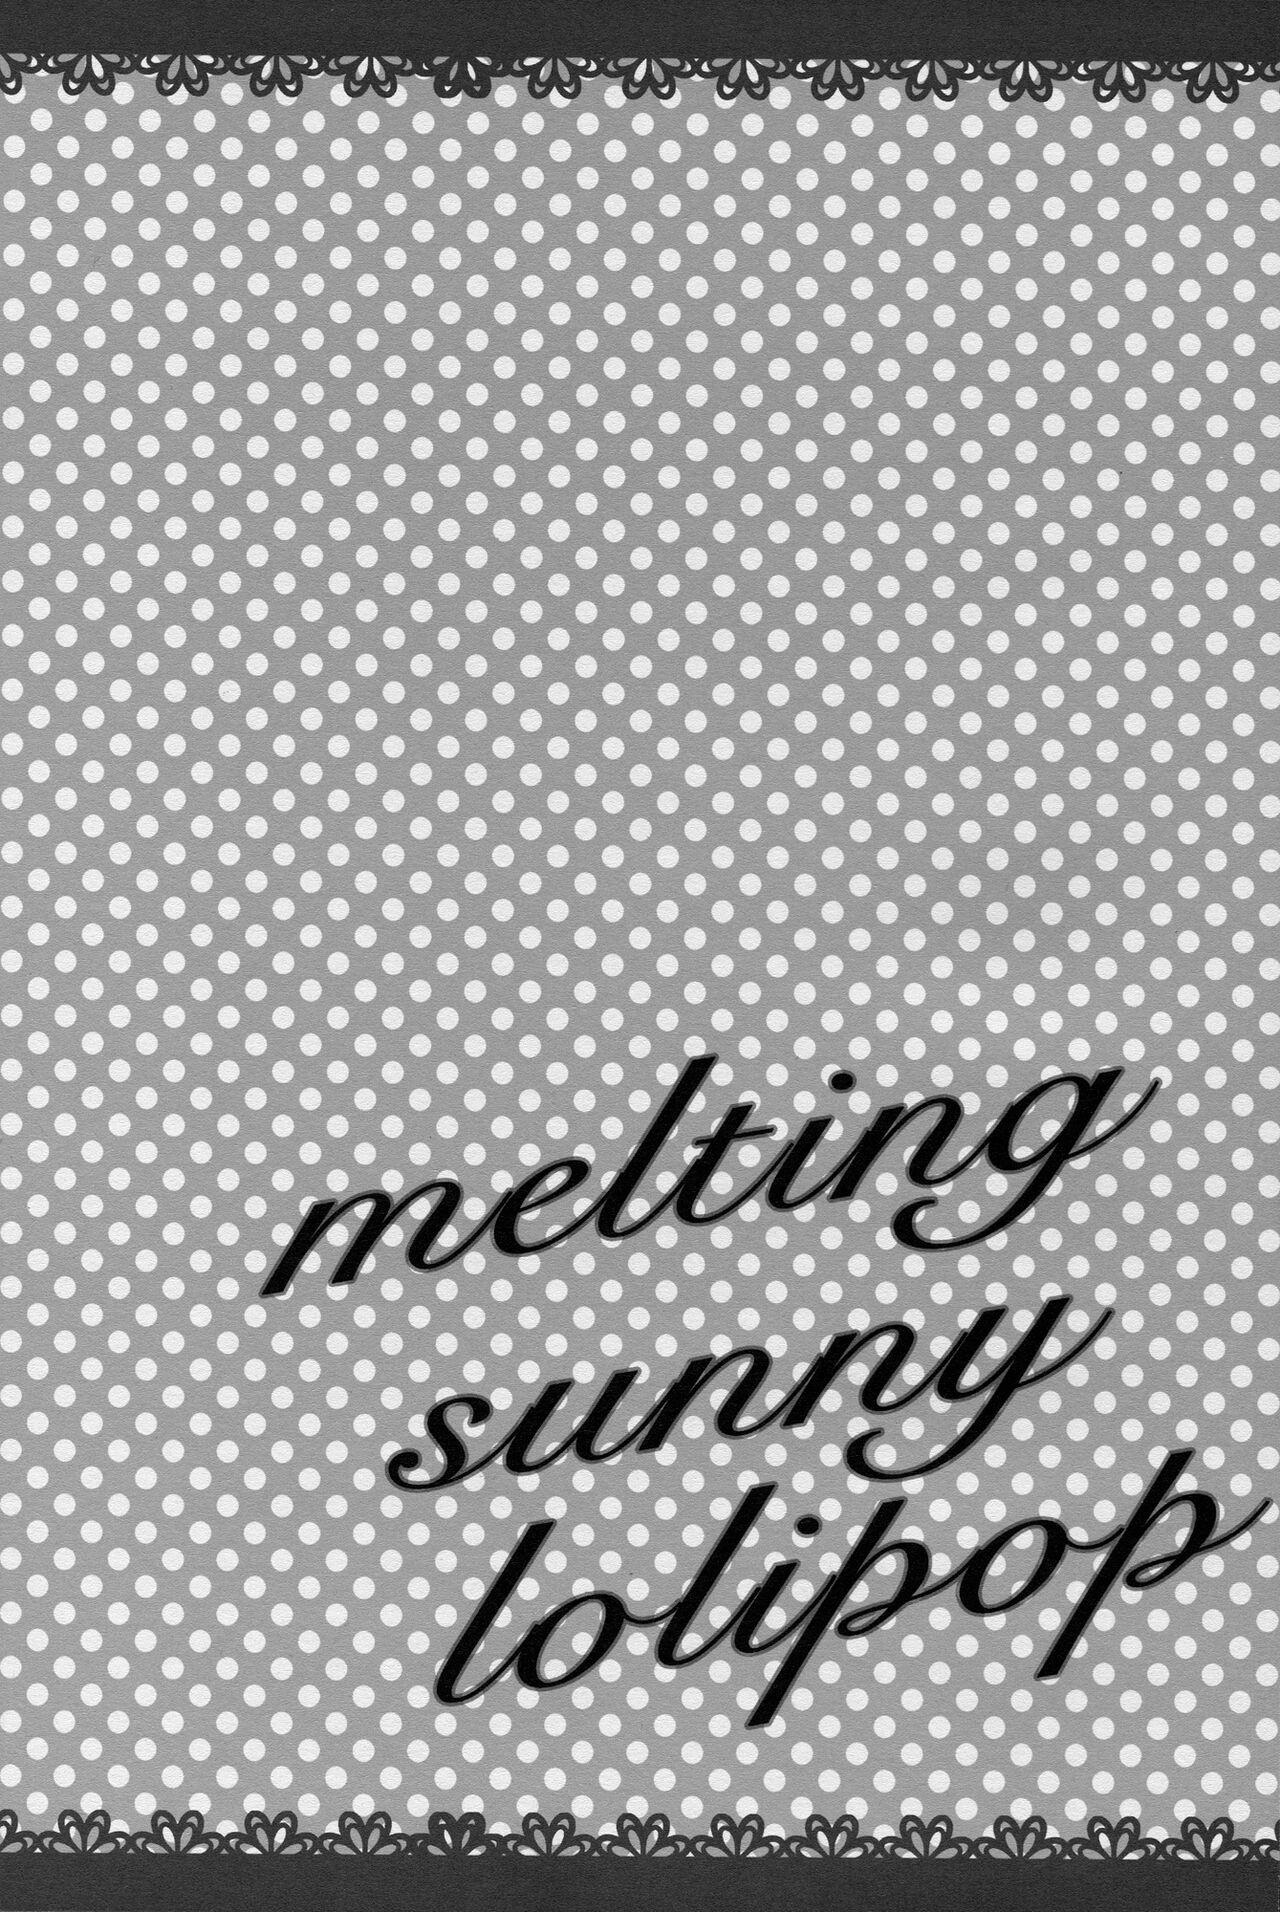 Siririca Melting Sunny Lolipop - Full metal panic Amazing - Page 5